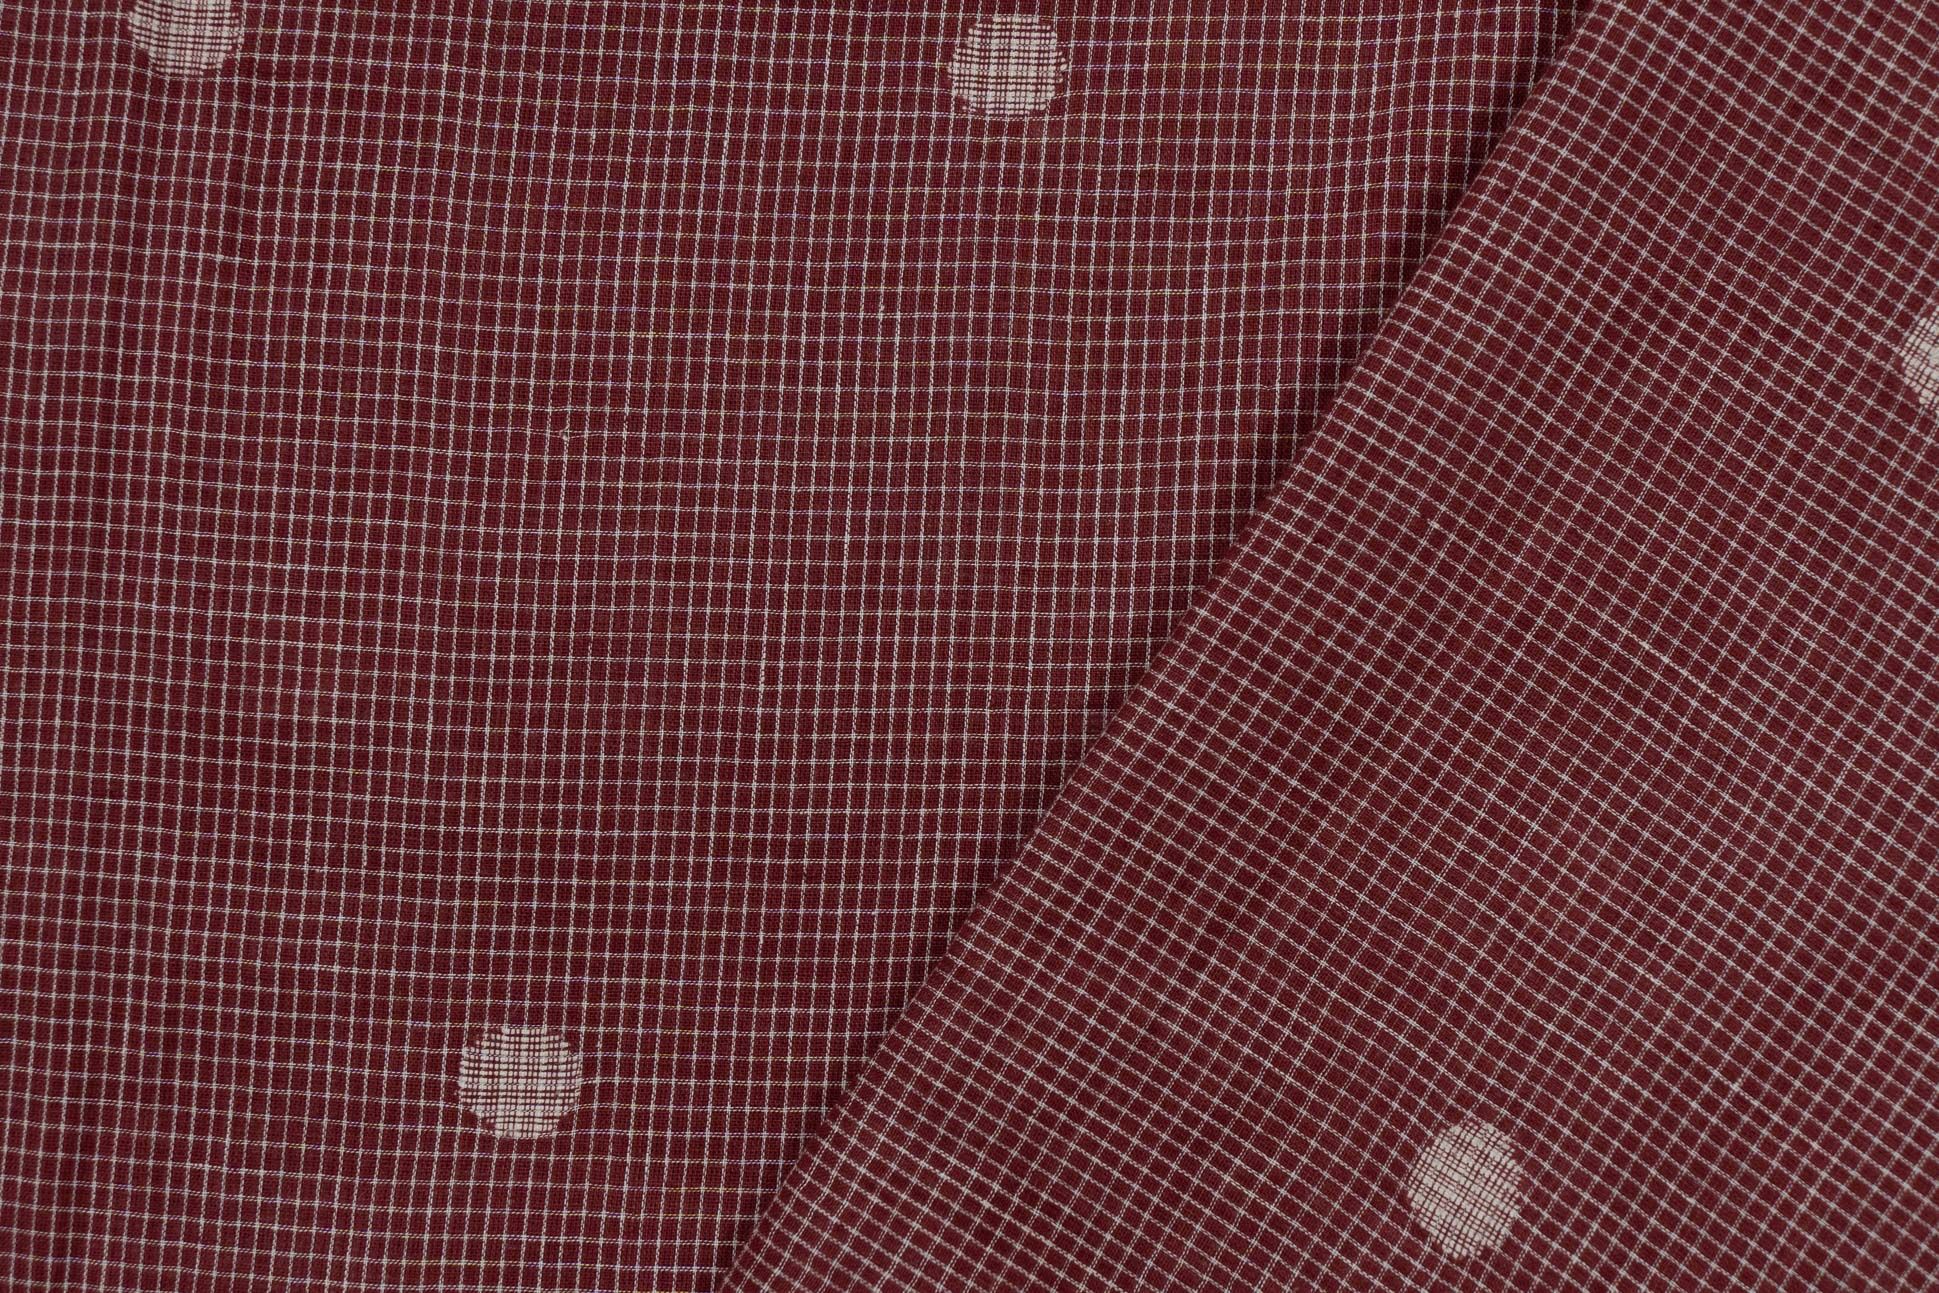 Persian Red Handloom Khari Cotton Fabric